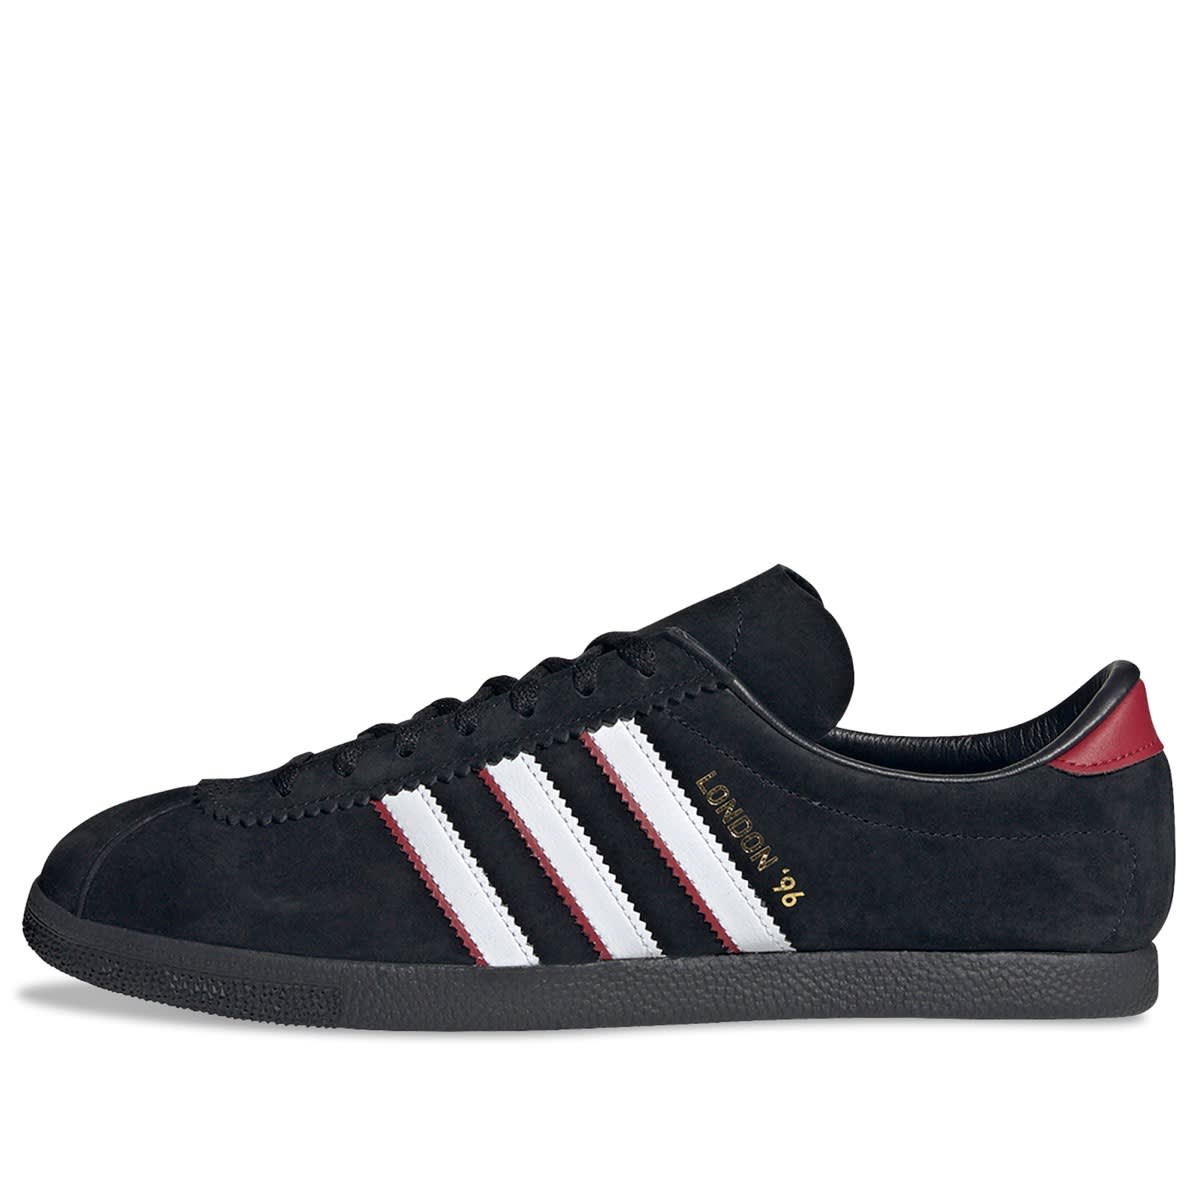 Adidas London 96 Core Black / White / Better Scarlet